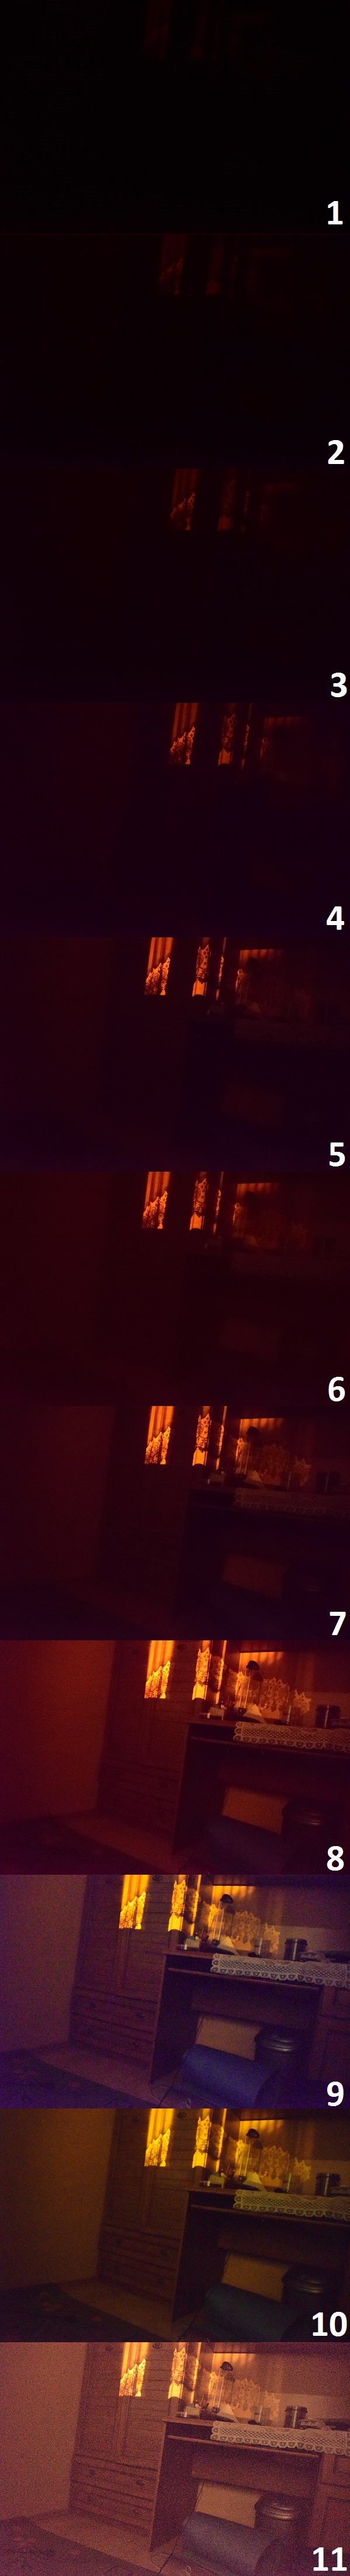 Nikon D5300 almost completely dark room example photo 2